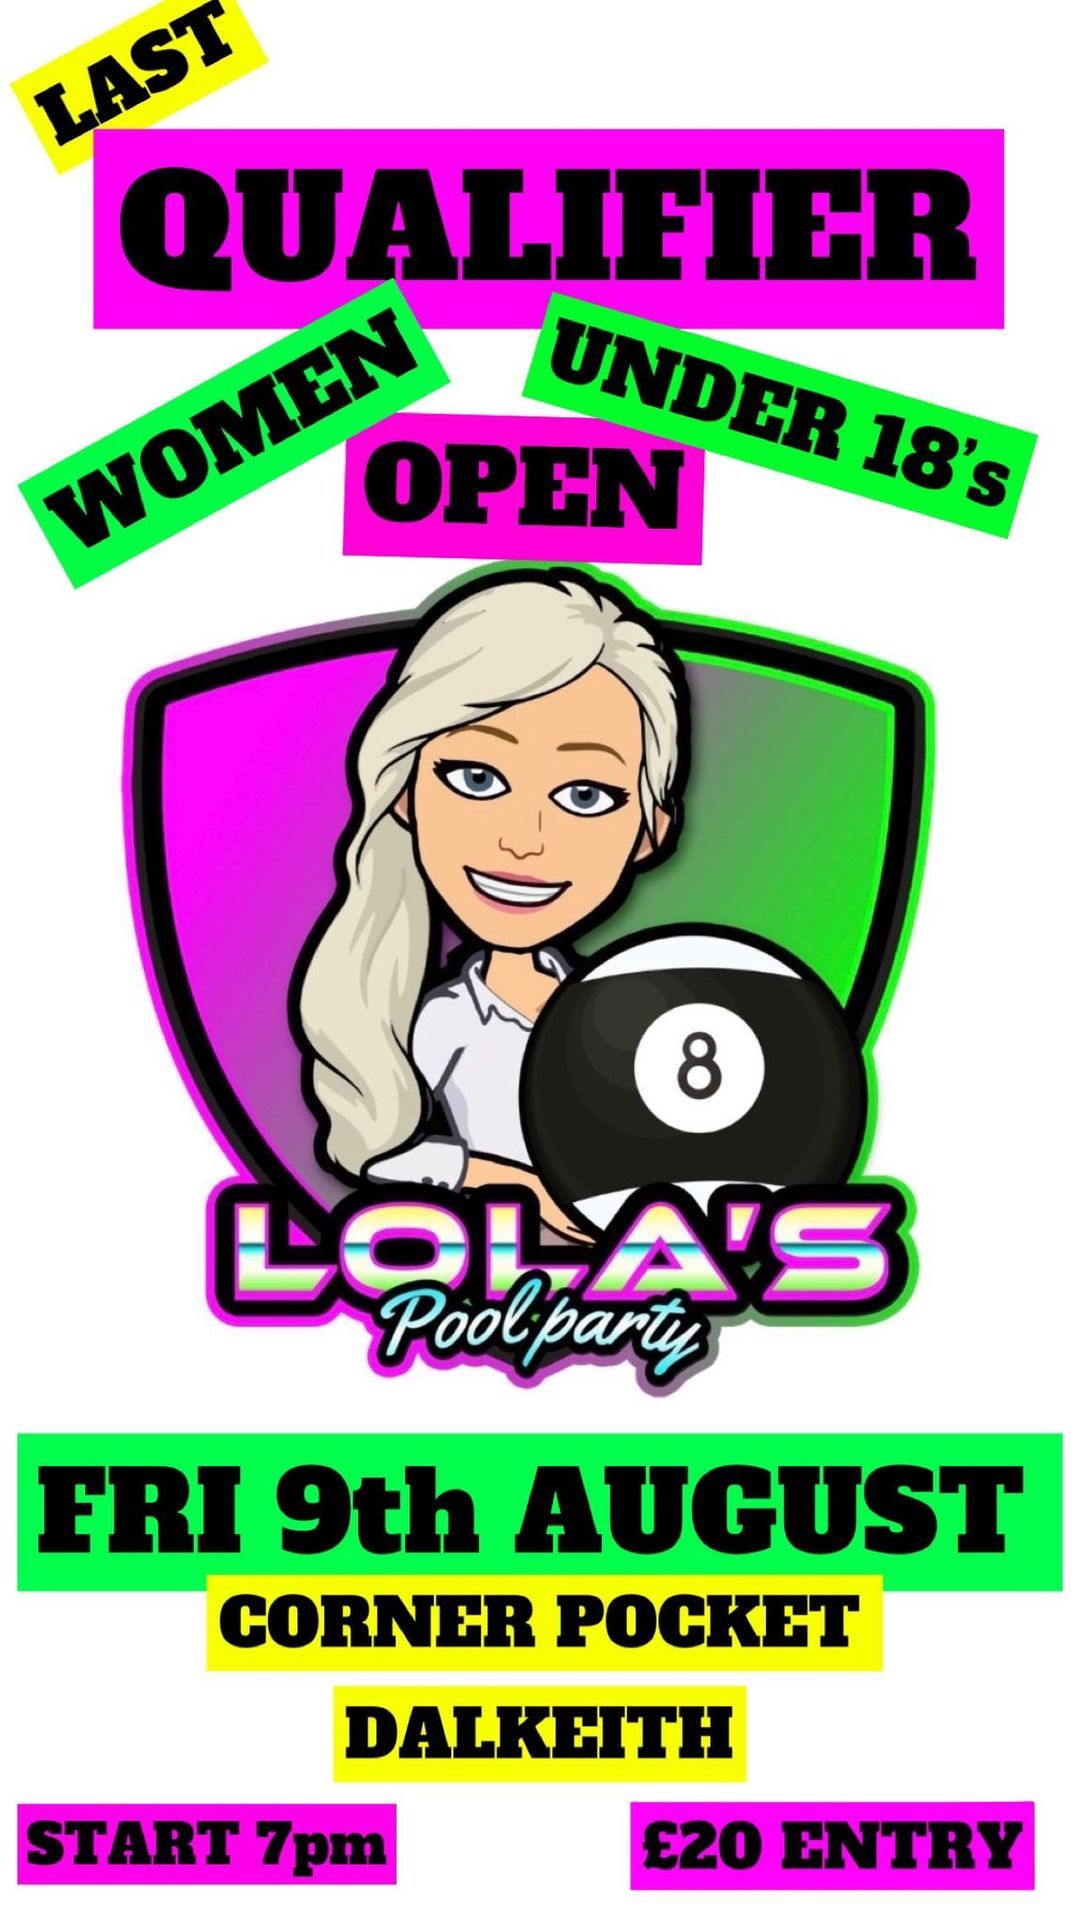 Lola's Pool Party, The Last Qualifier - Corner Pocket, Dalkeith